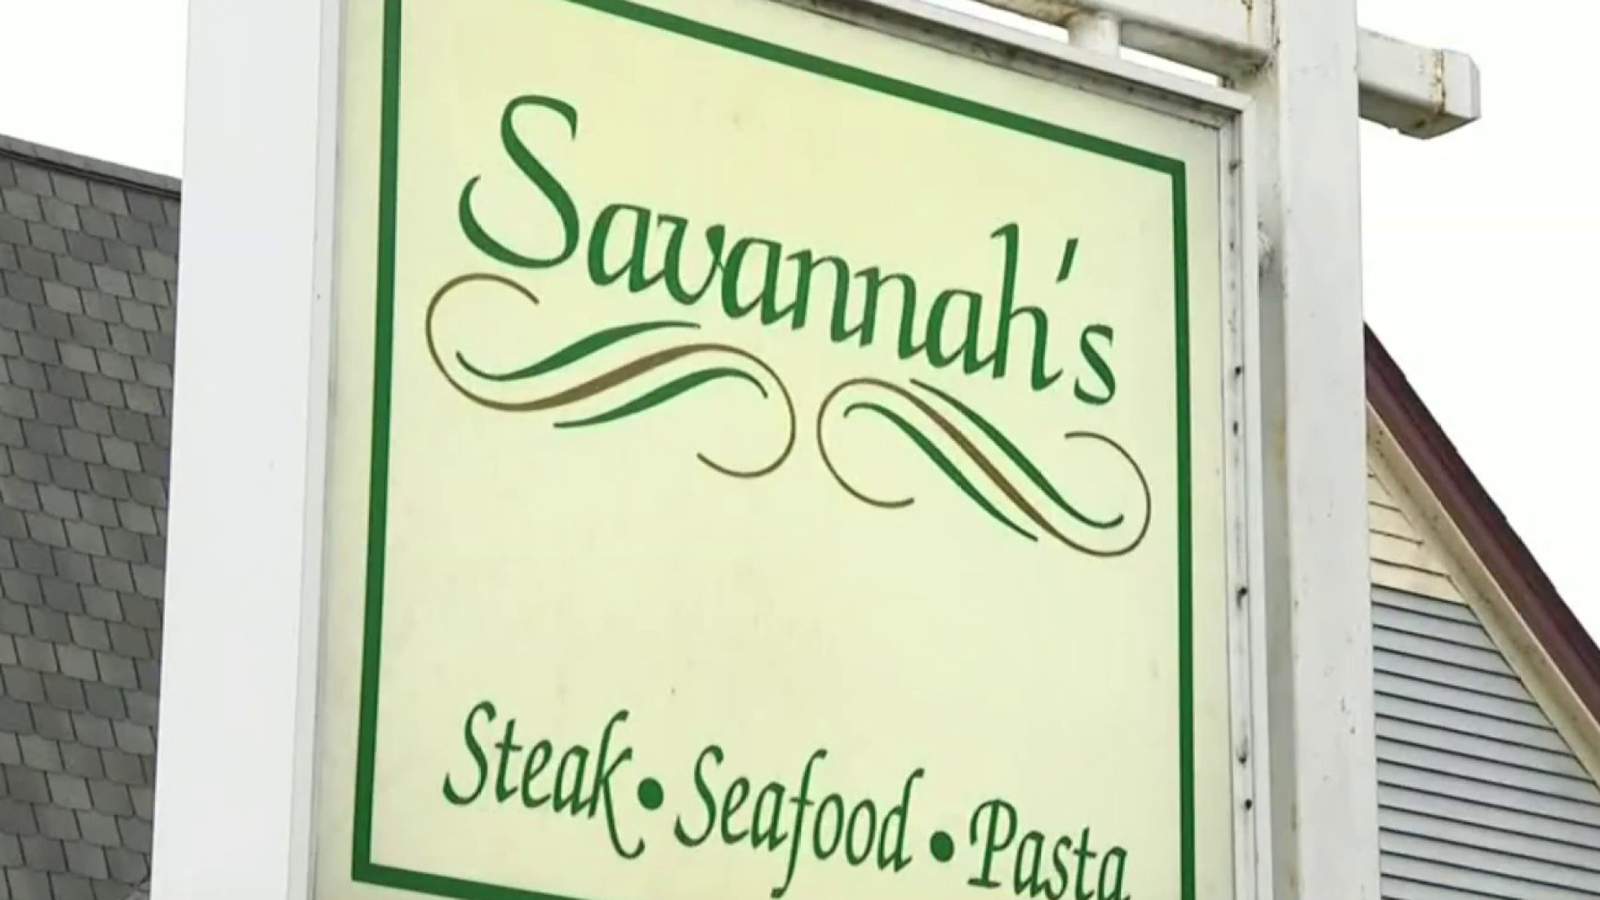 Savannah’s Restaurant in Trenton is closing its doors